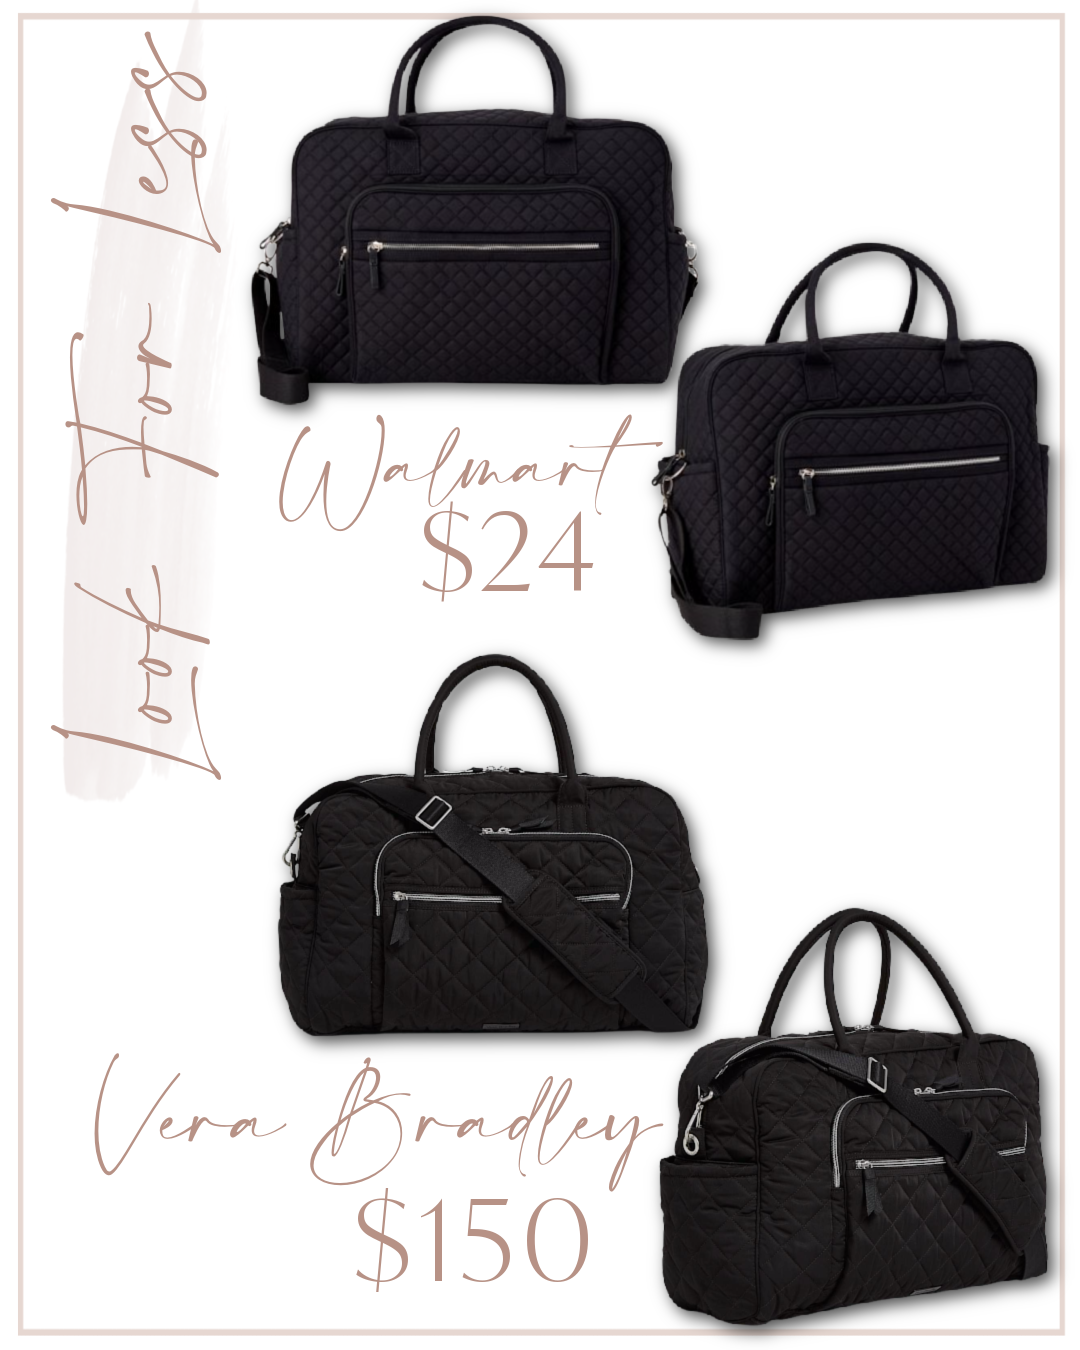 Louis Vuitton inspired bag from Walmart part 3 #dupe #handbags